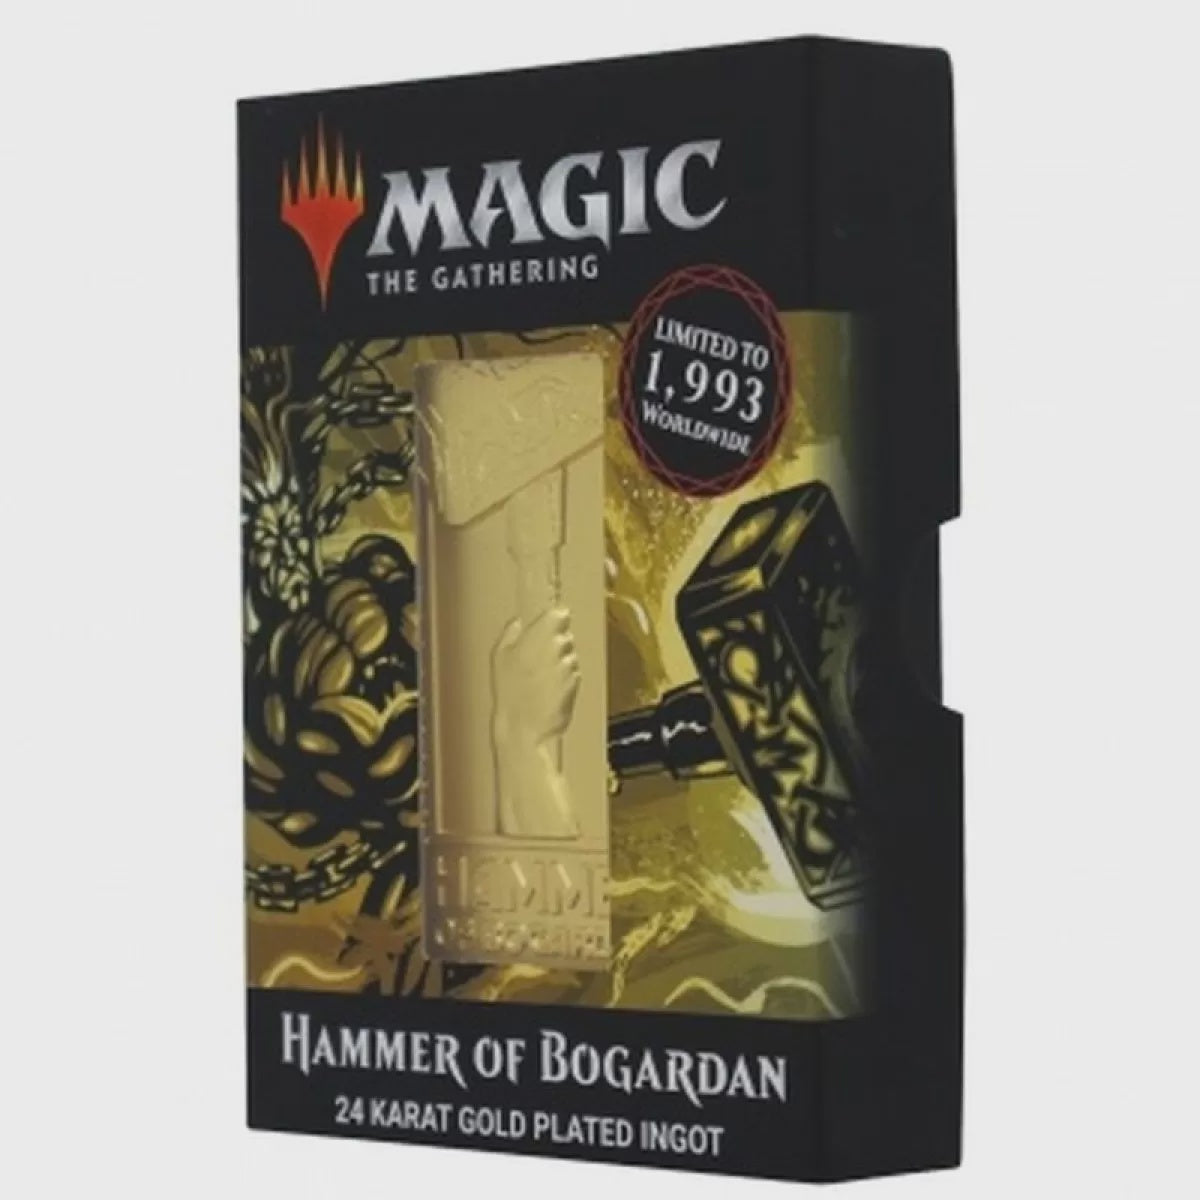 Magic: The Gathering Hammer of Bogardan 24 Karat Gold Plated Card